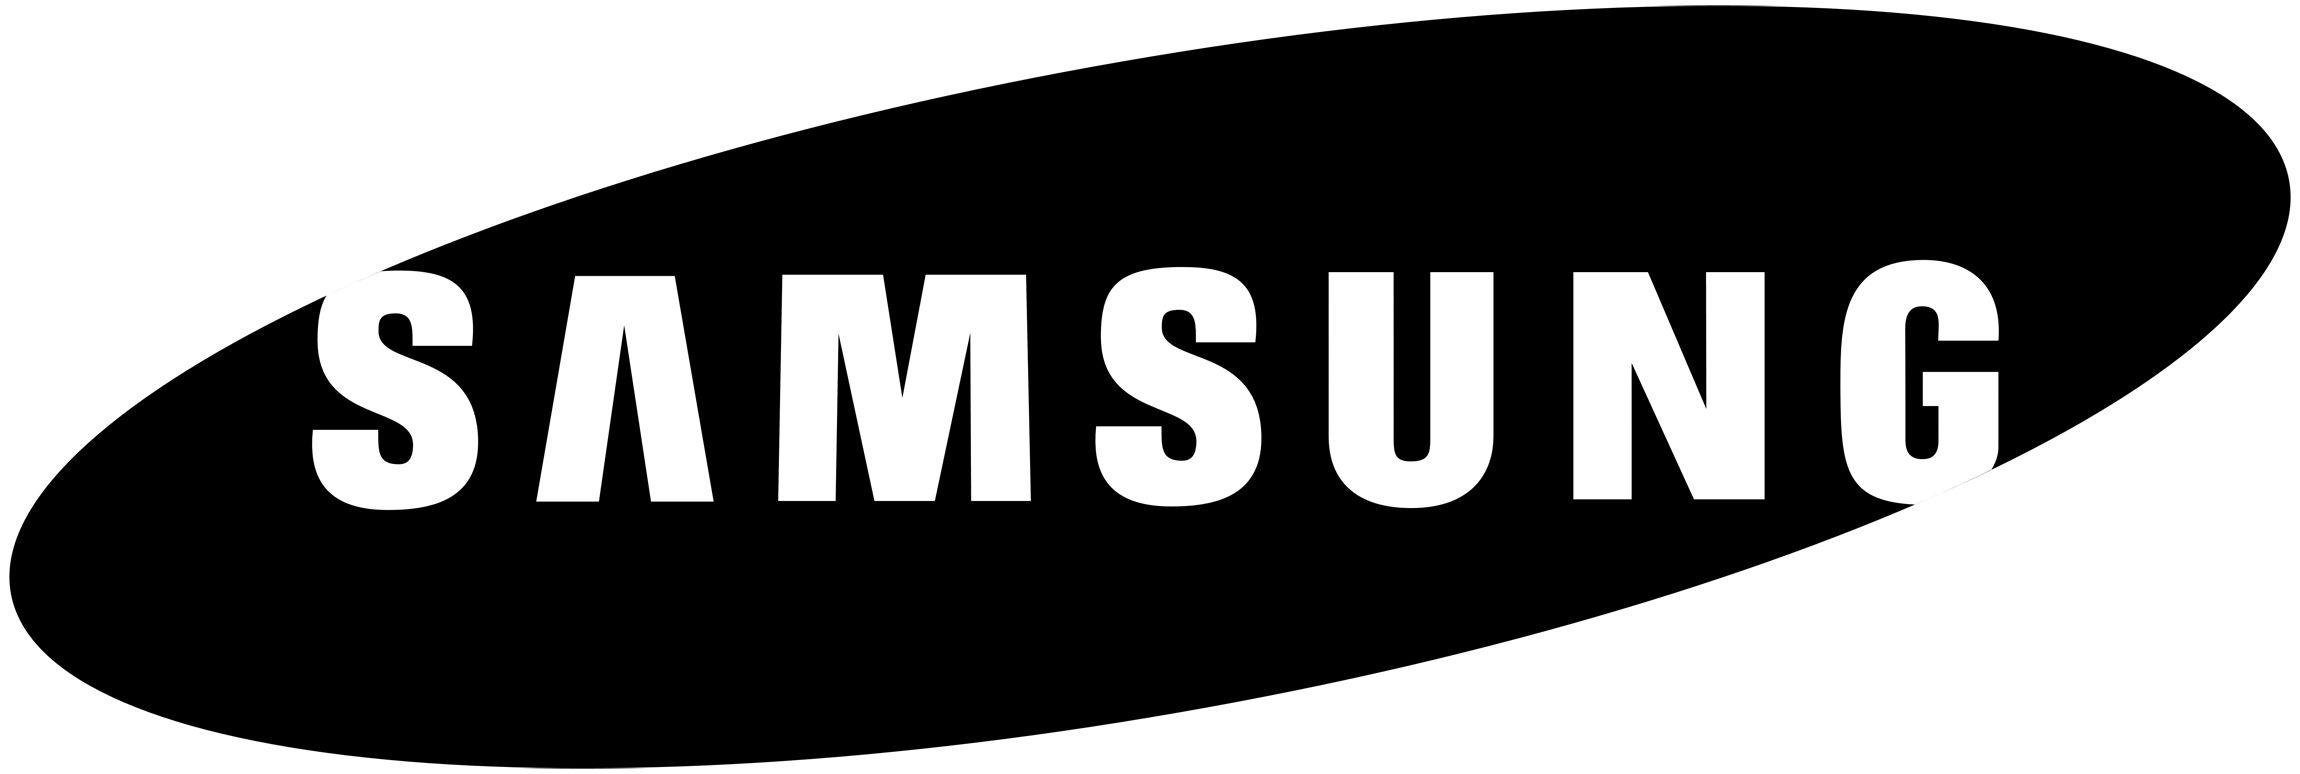 Samsung Company Logo - Samsung Logo, Samsung Symbol, Meaning, History and Evolution